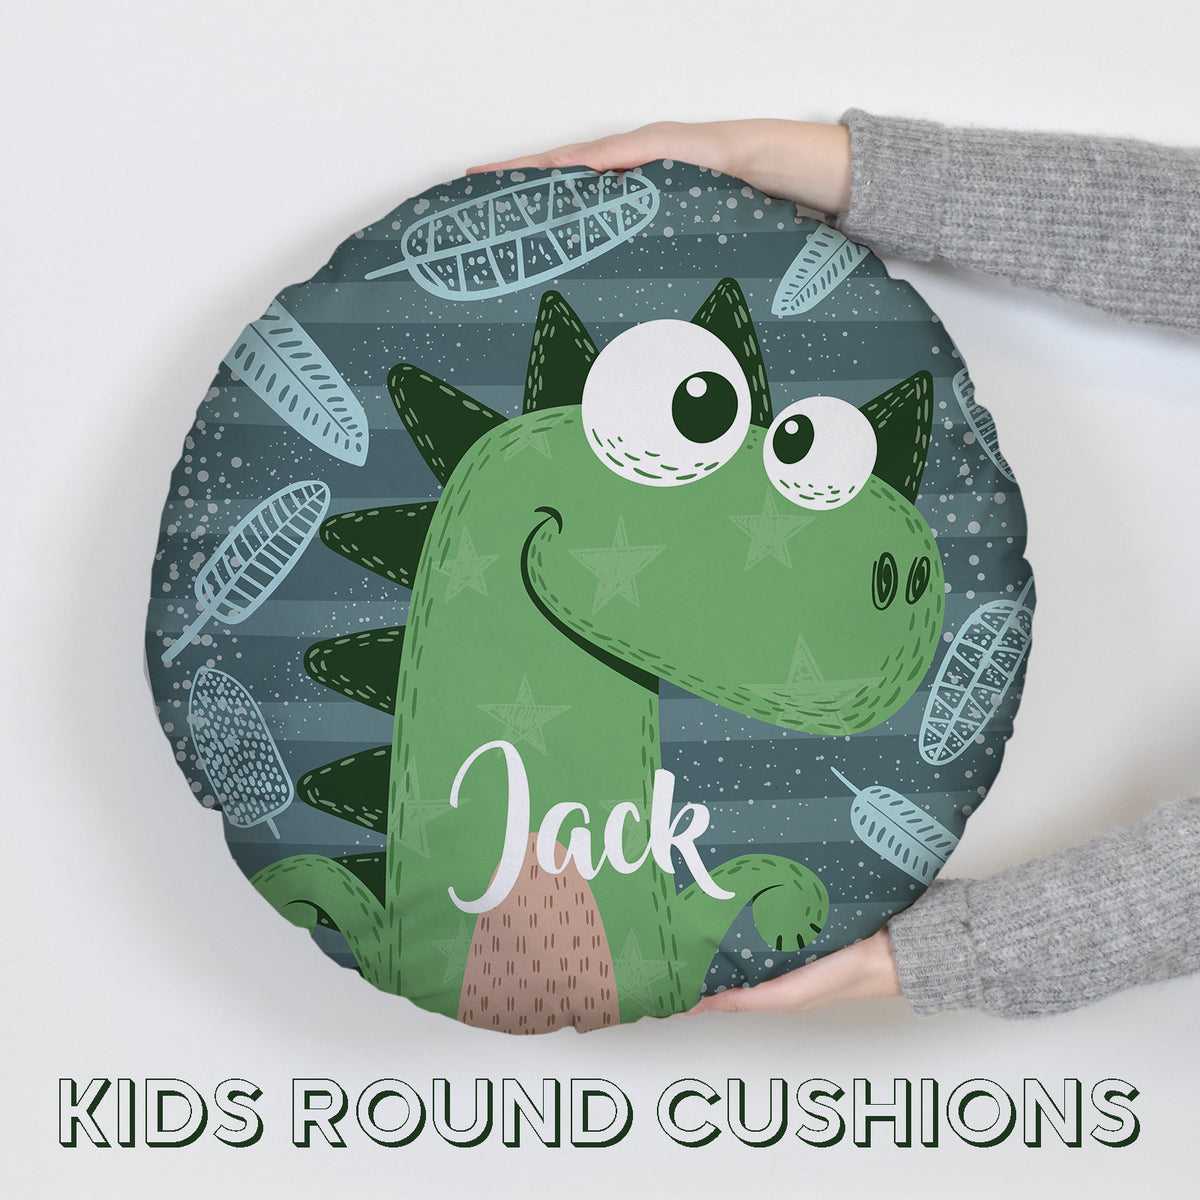 Personalised Round Children's Cushions